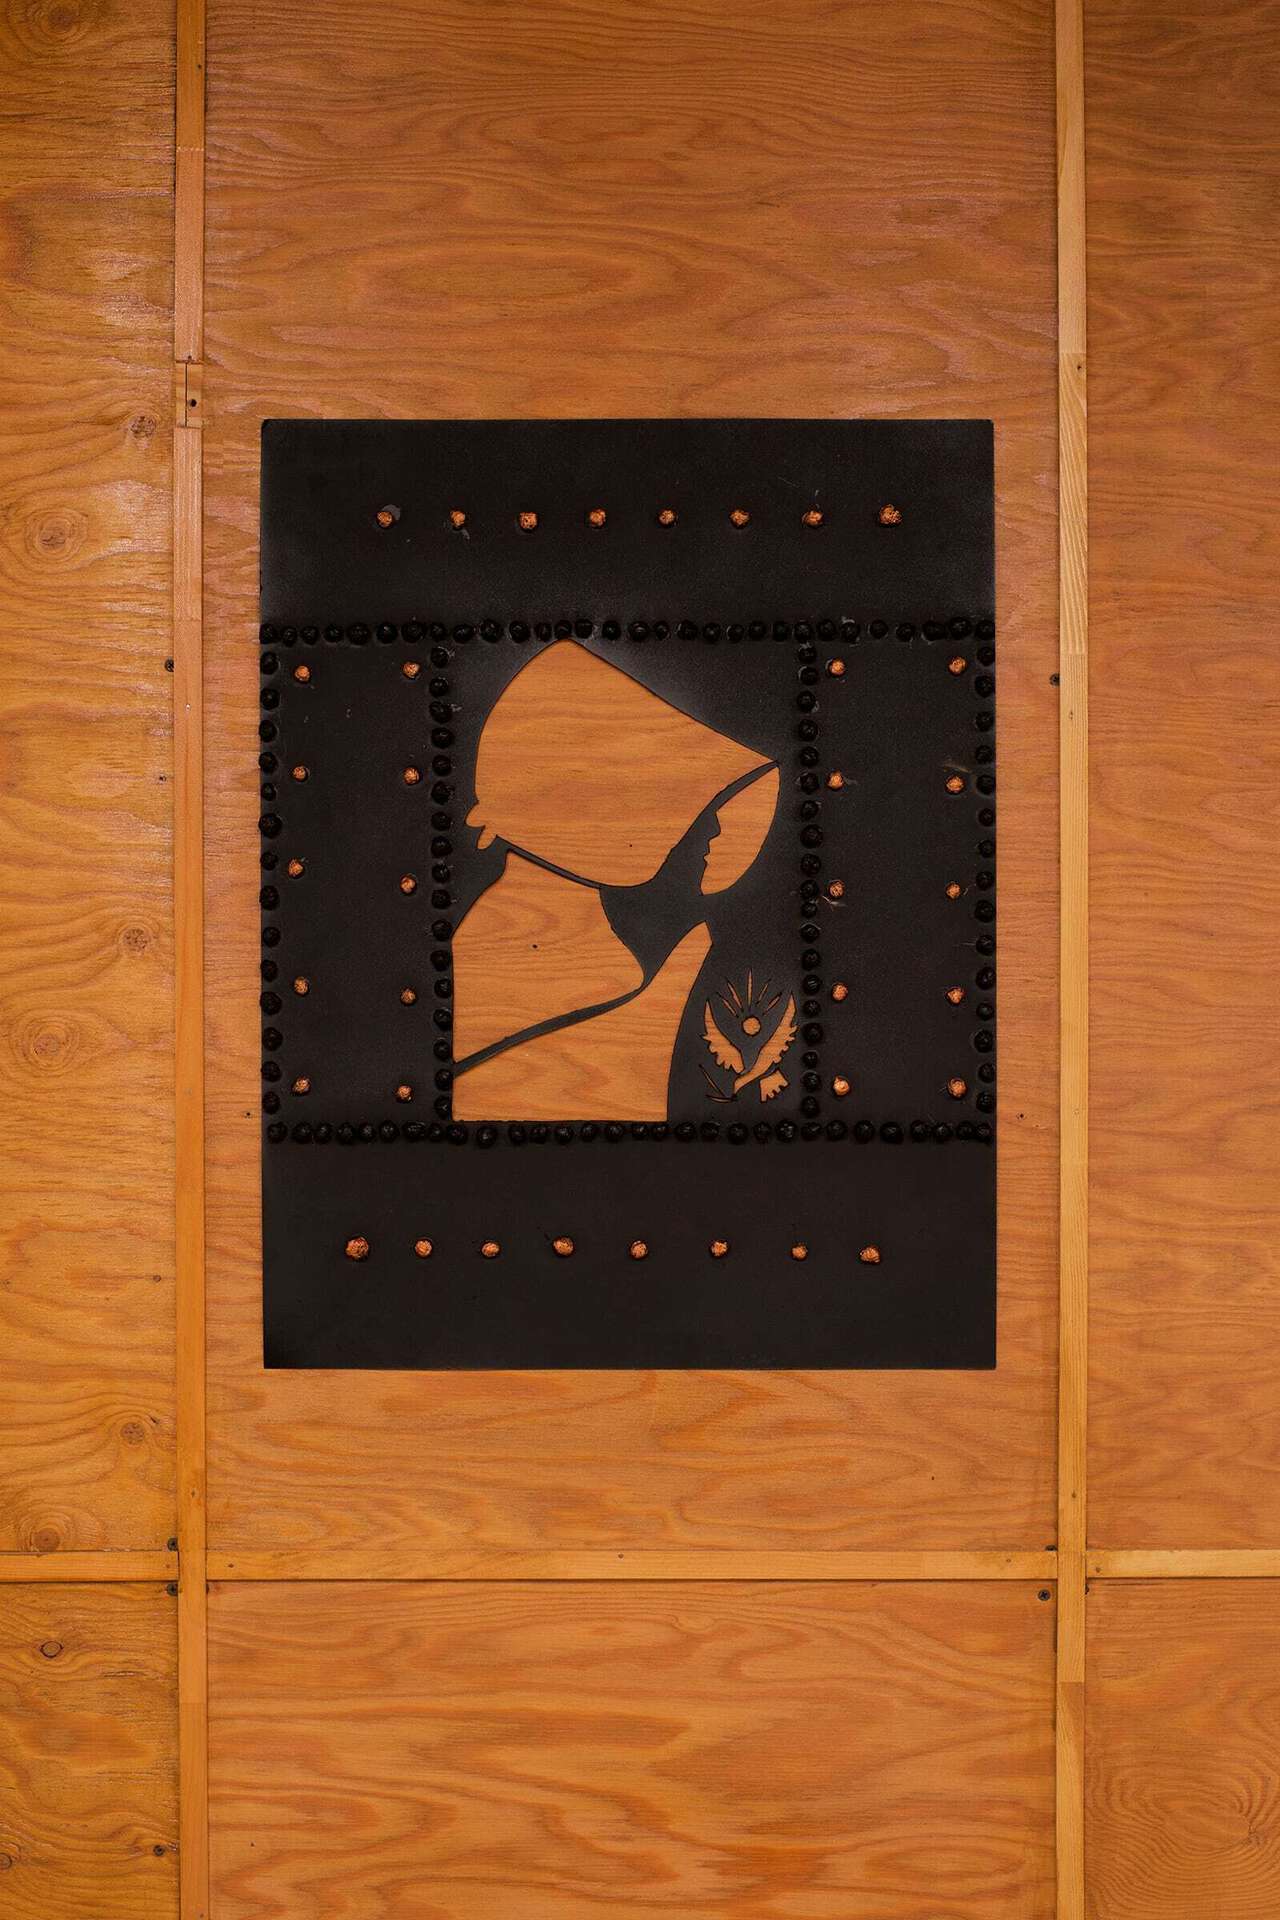 Yanina Chernykh, Forth of may, 2020, cardboard, papier-mache, 50 x 60 cm